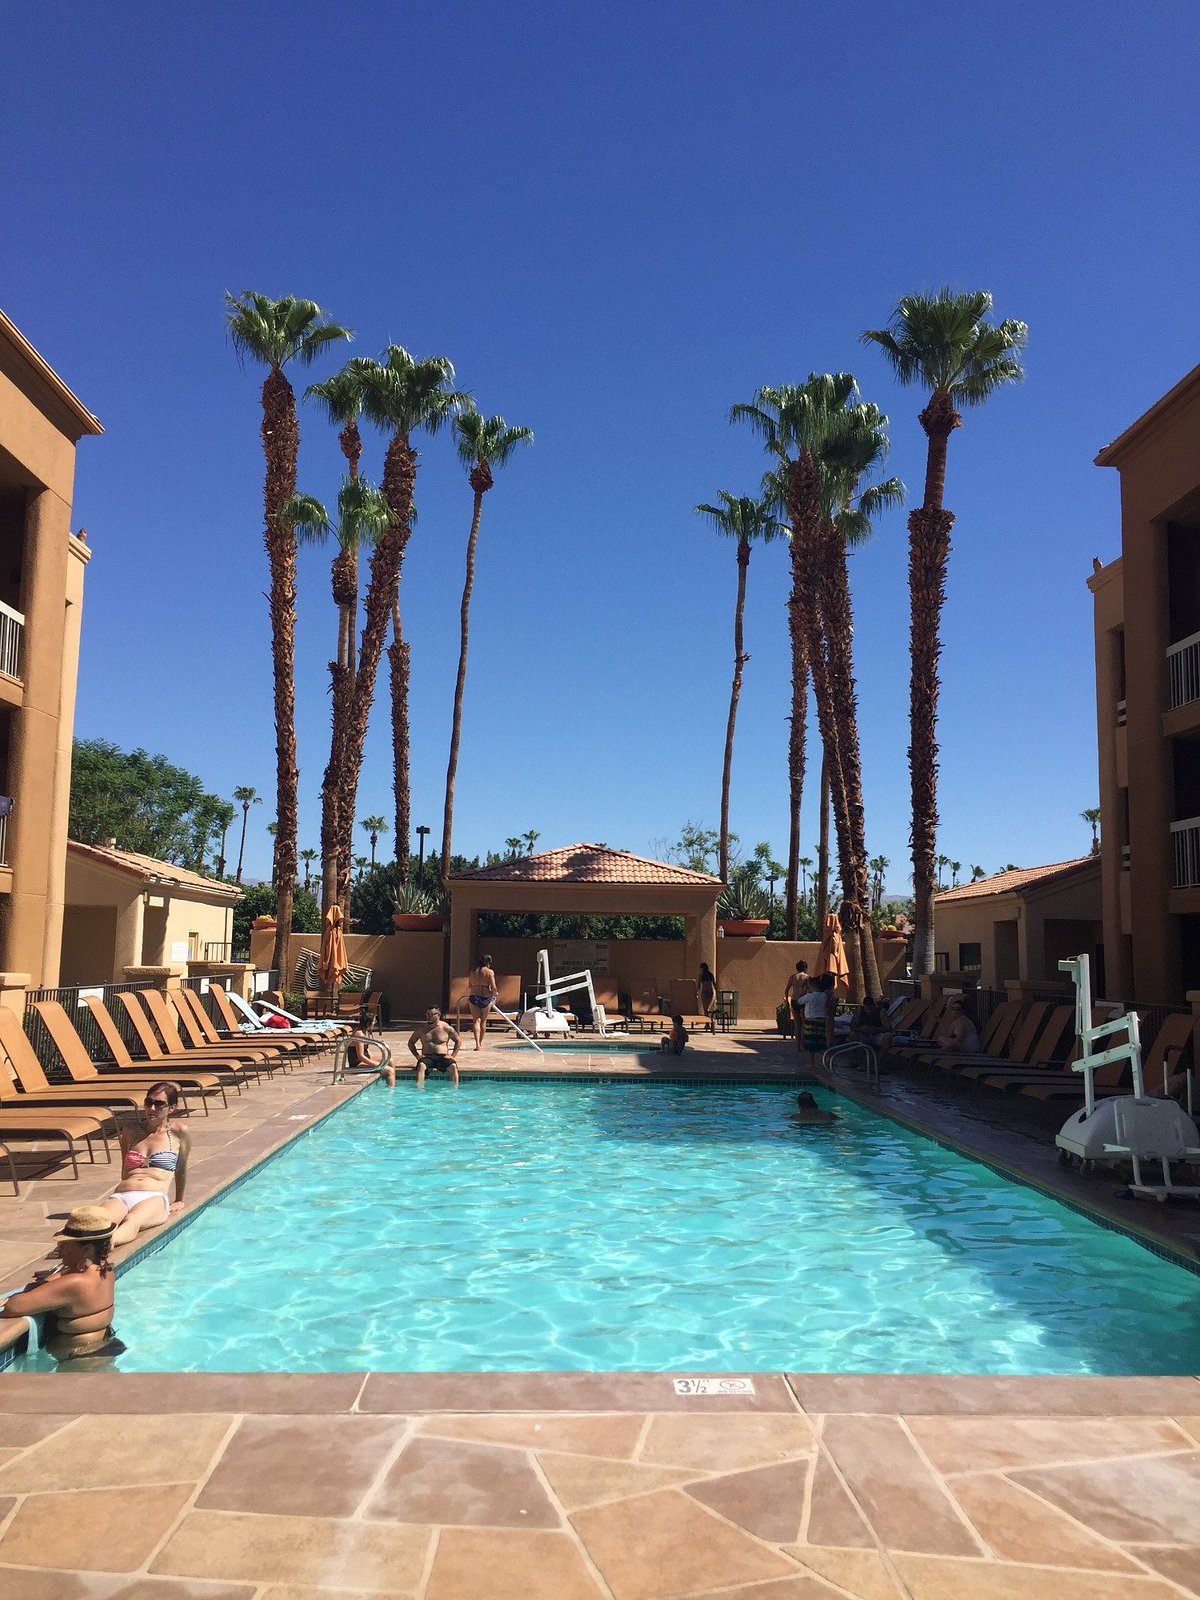 Courtyard By Marriott Palm Springs Pool Fotos Und Bewertungen Tripadvisor 0597